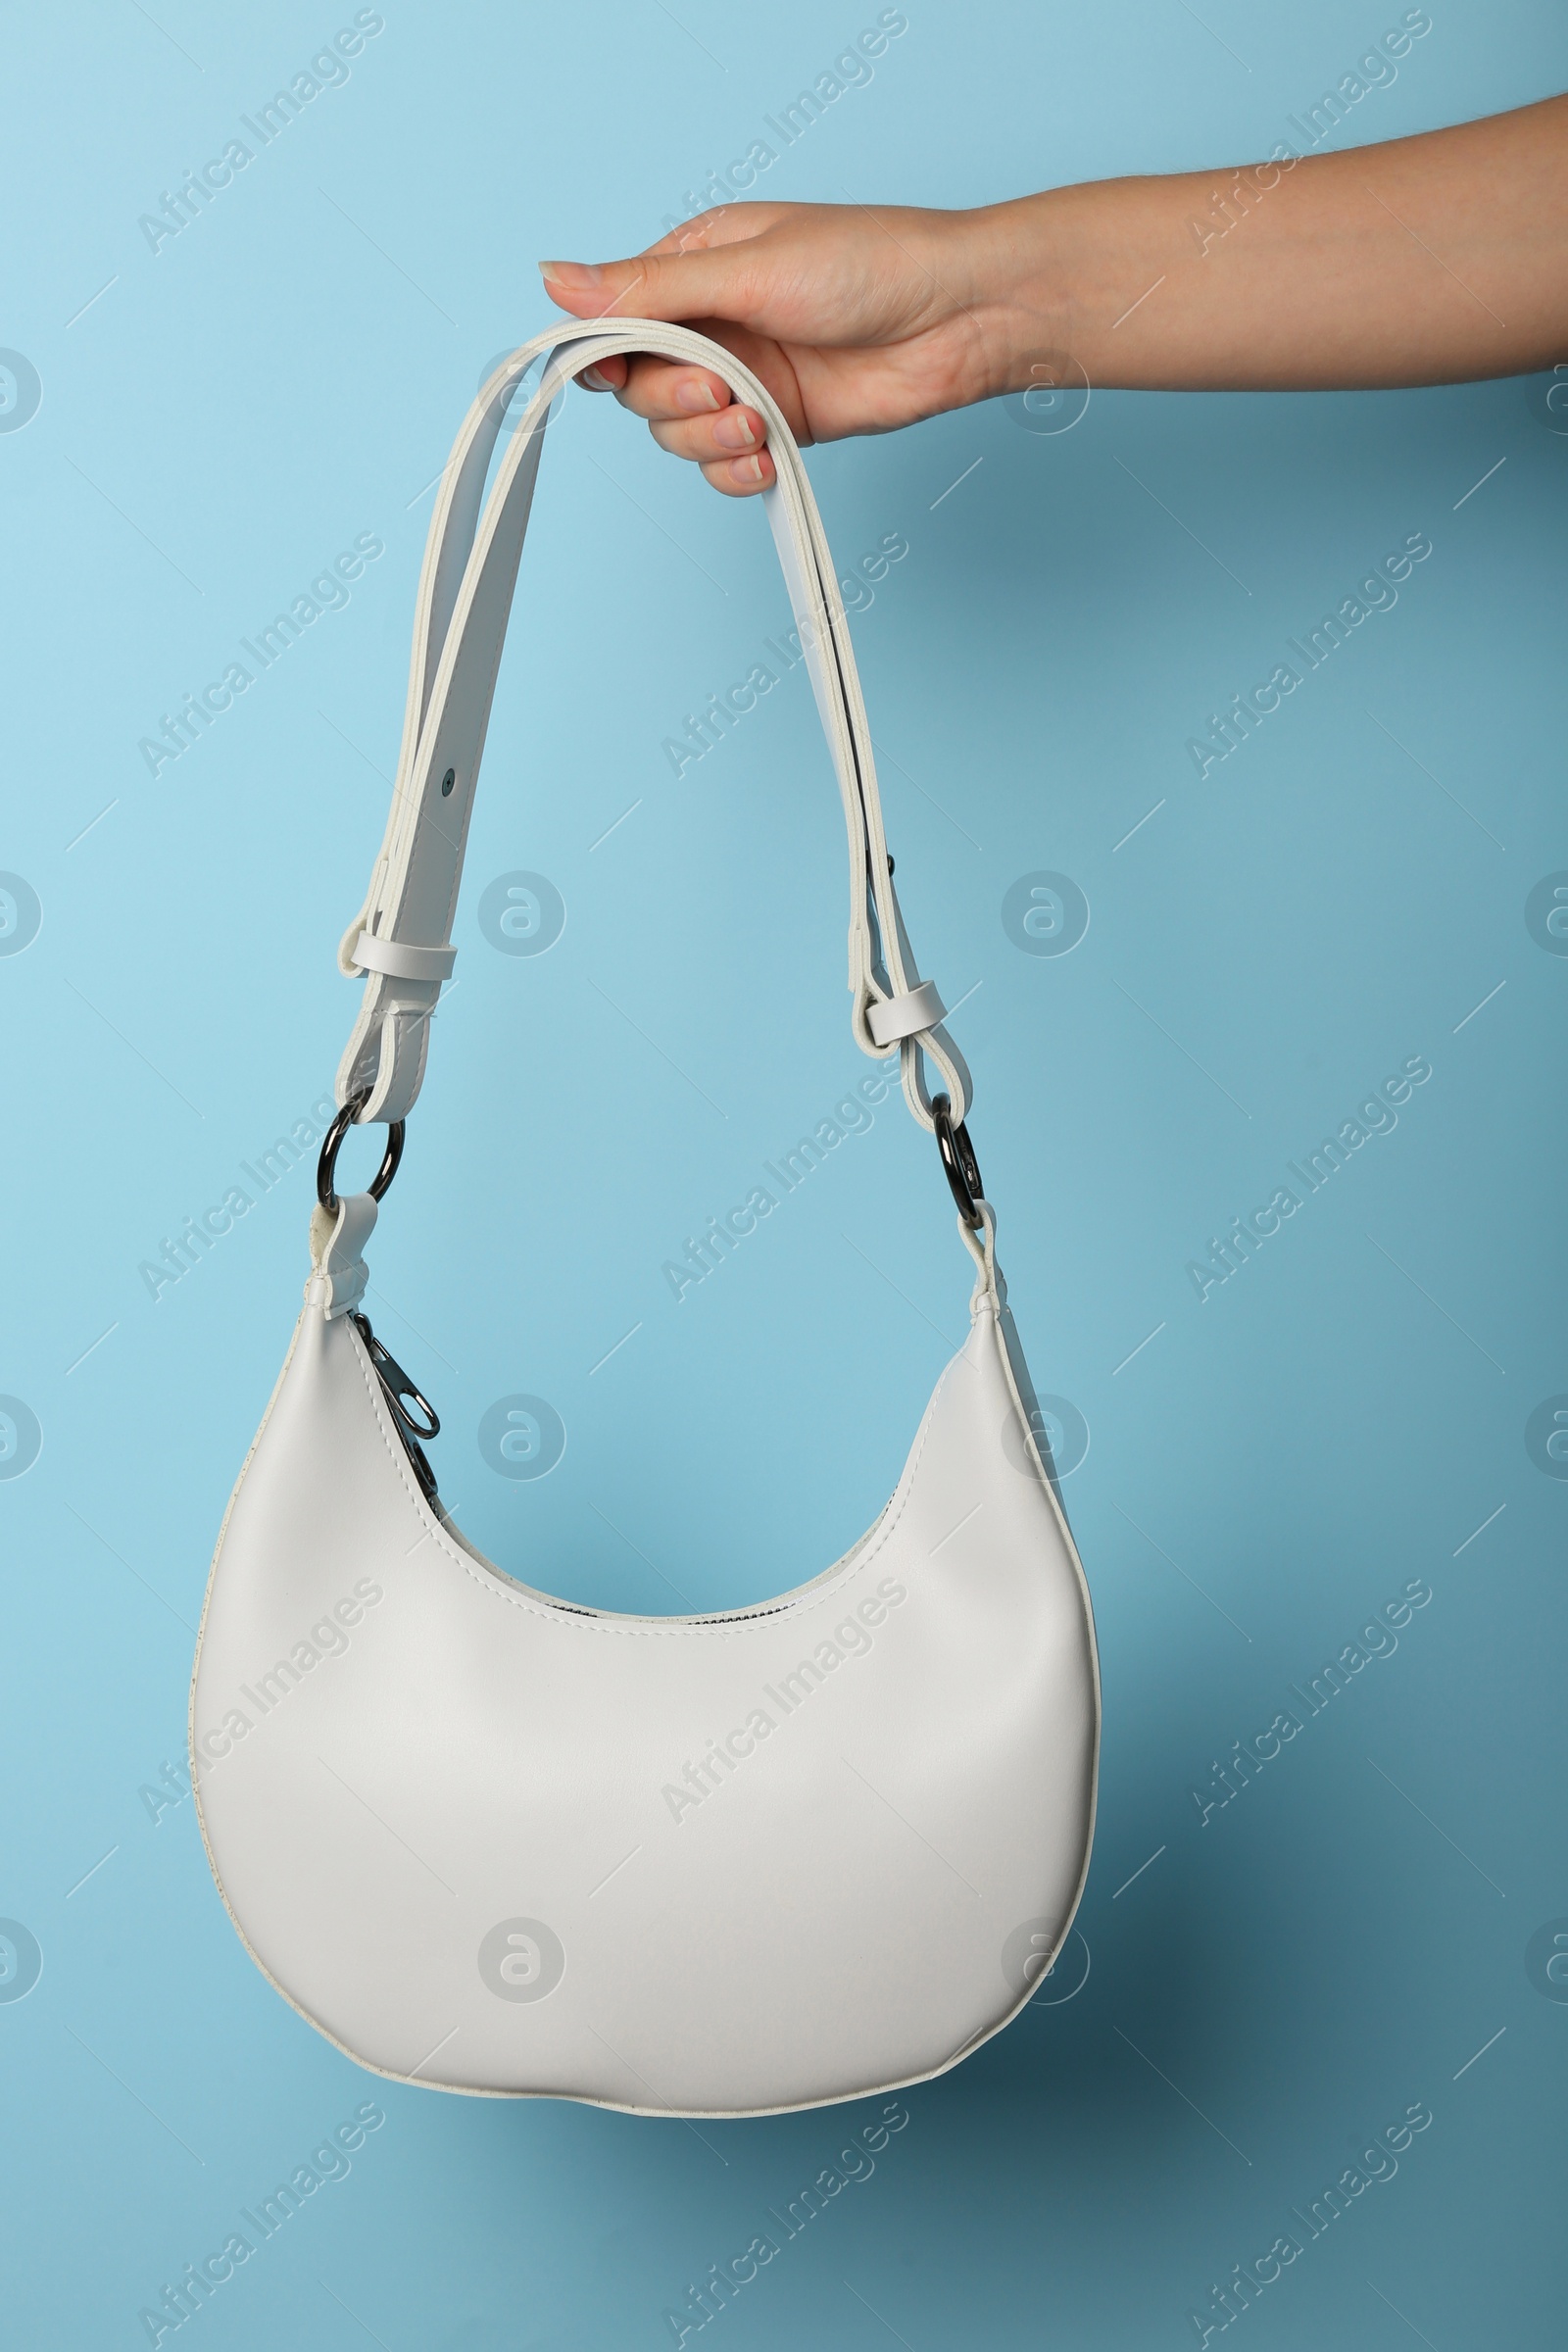 Photo of Woman holding stylish white bag on light blue background, closeup